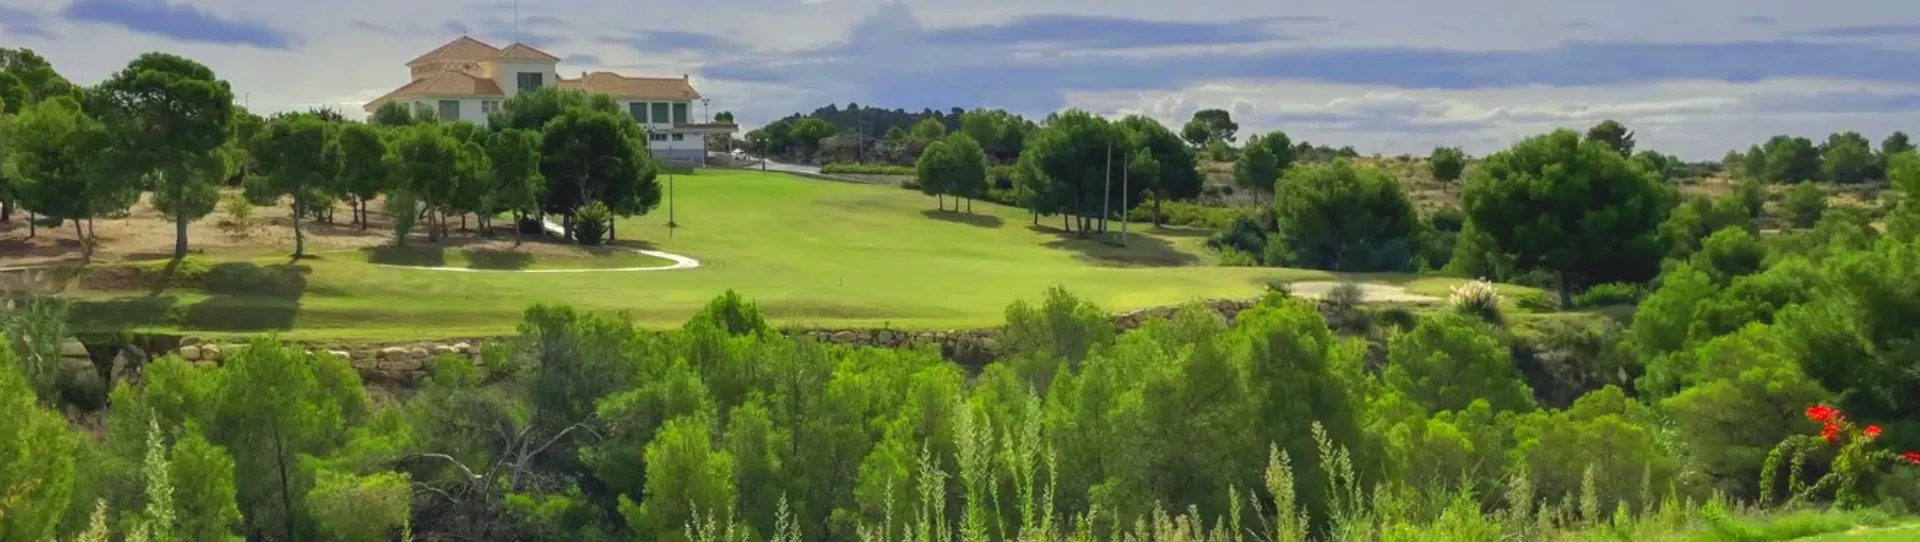 Spain golf courses - Puig Campana Golf - Photo 4